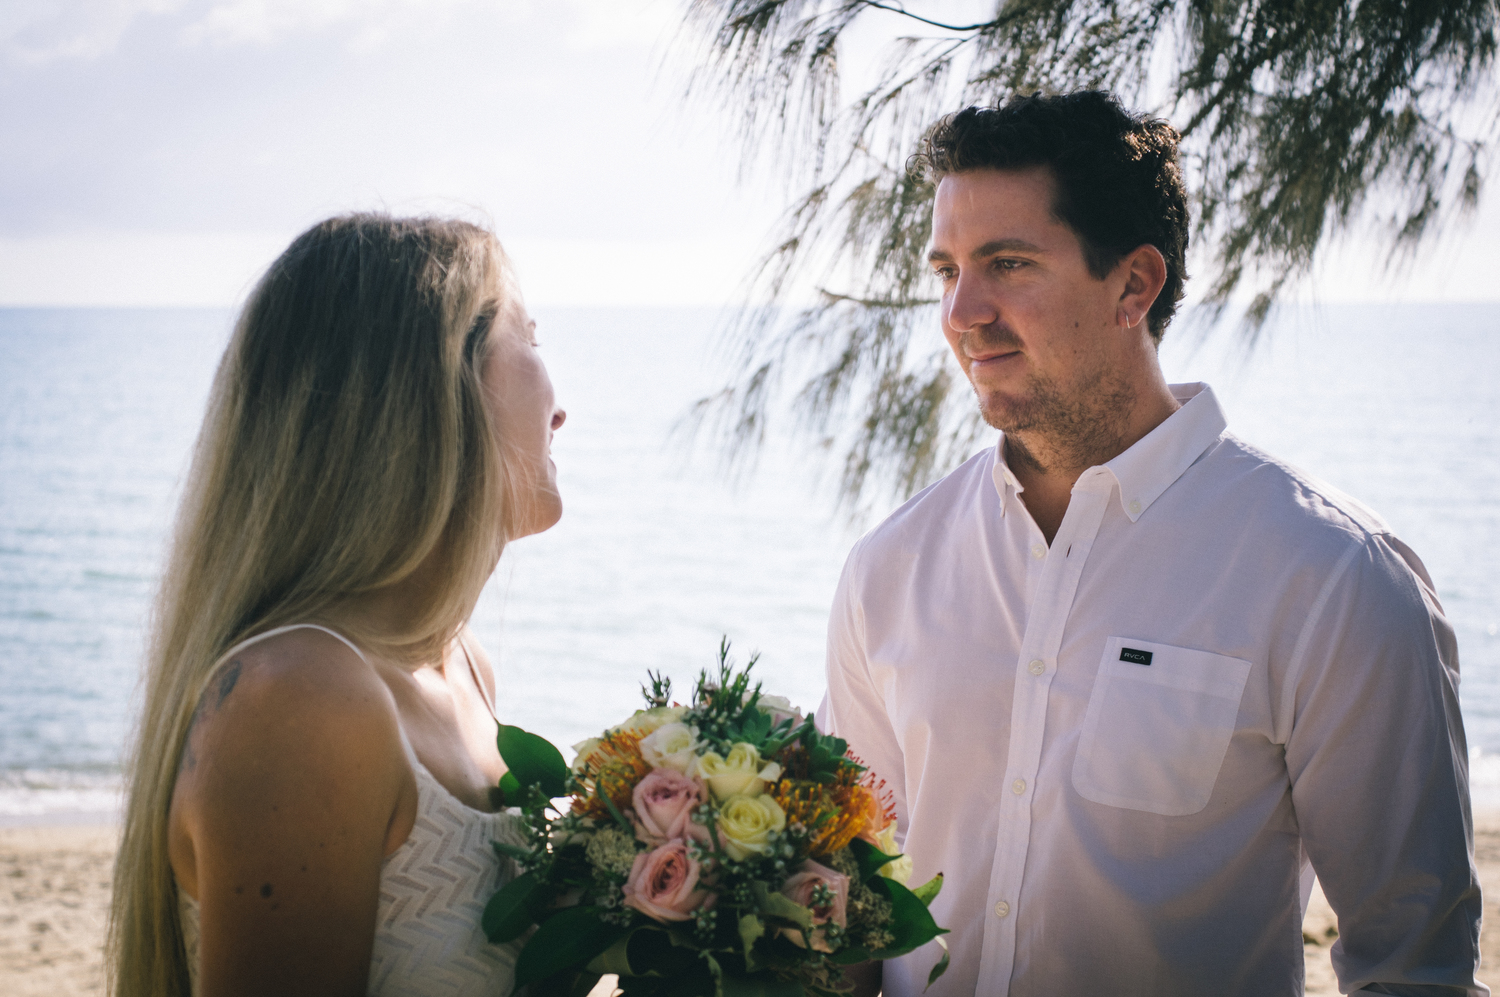 Craig Ines small Cairns wedding ceremony